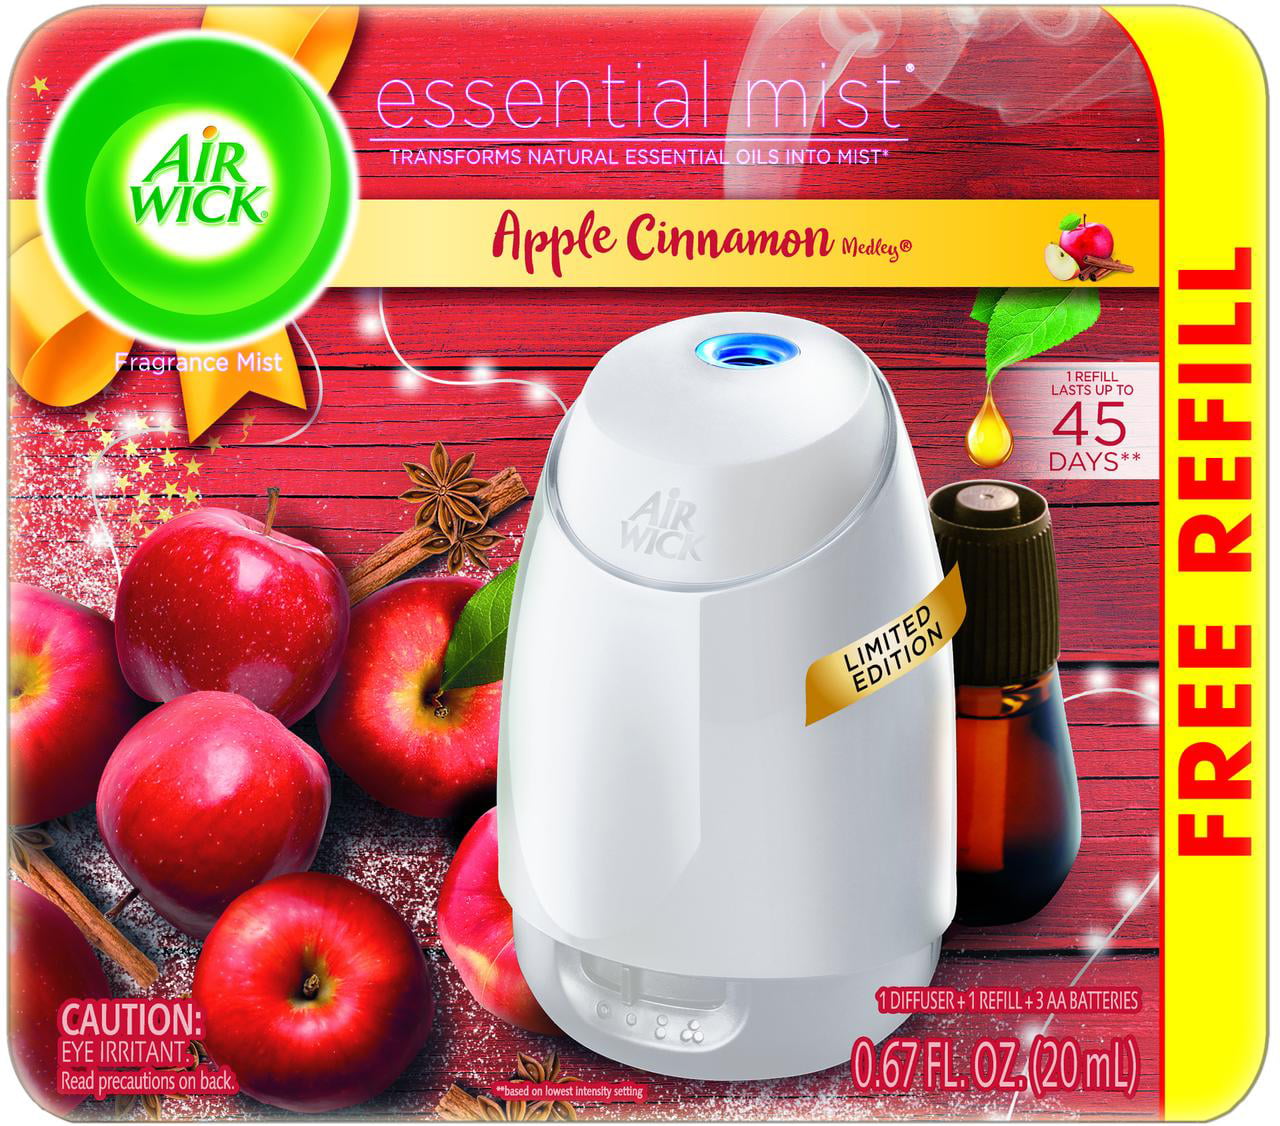 Air Wick Essential Mist Starter Kit (Diffuser + Refill), Apple